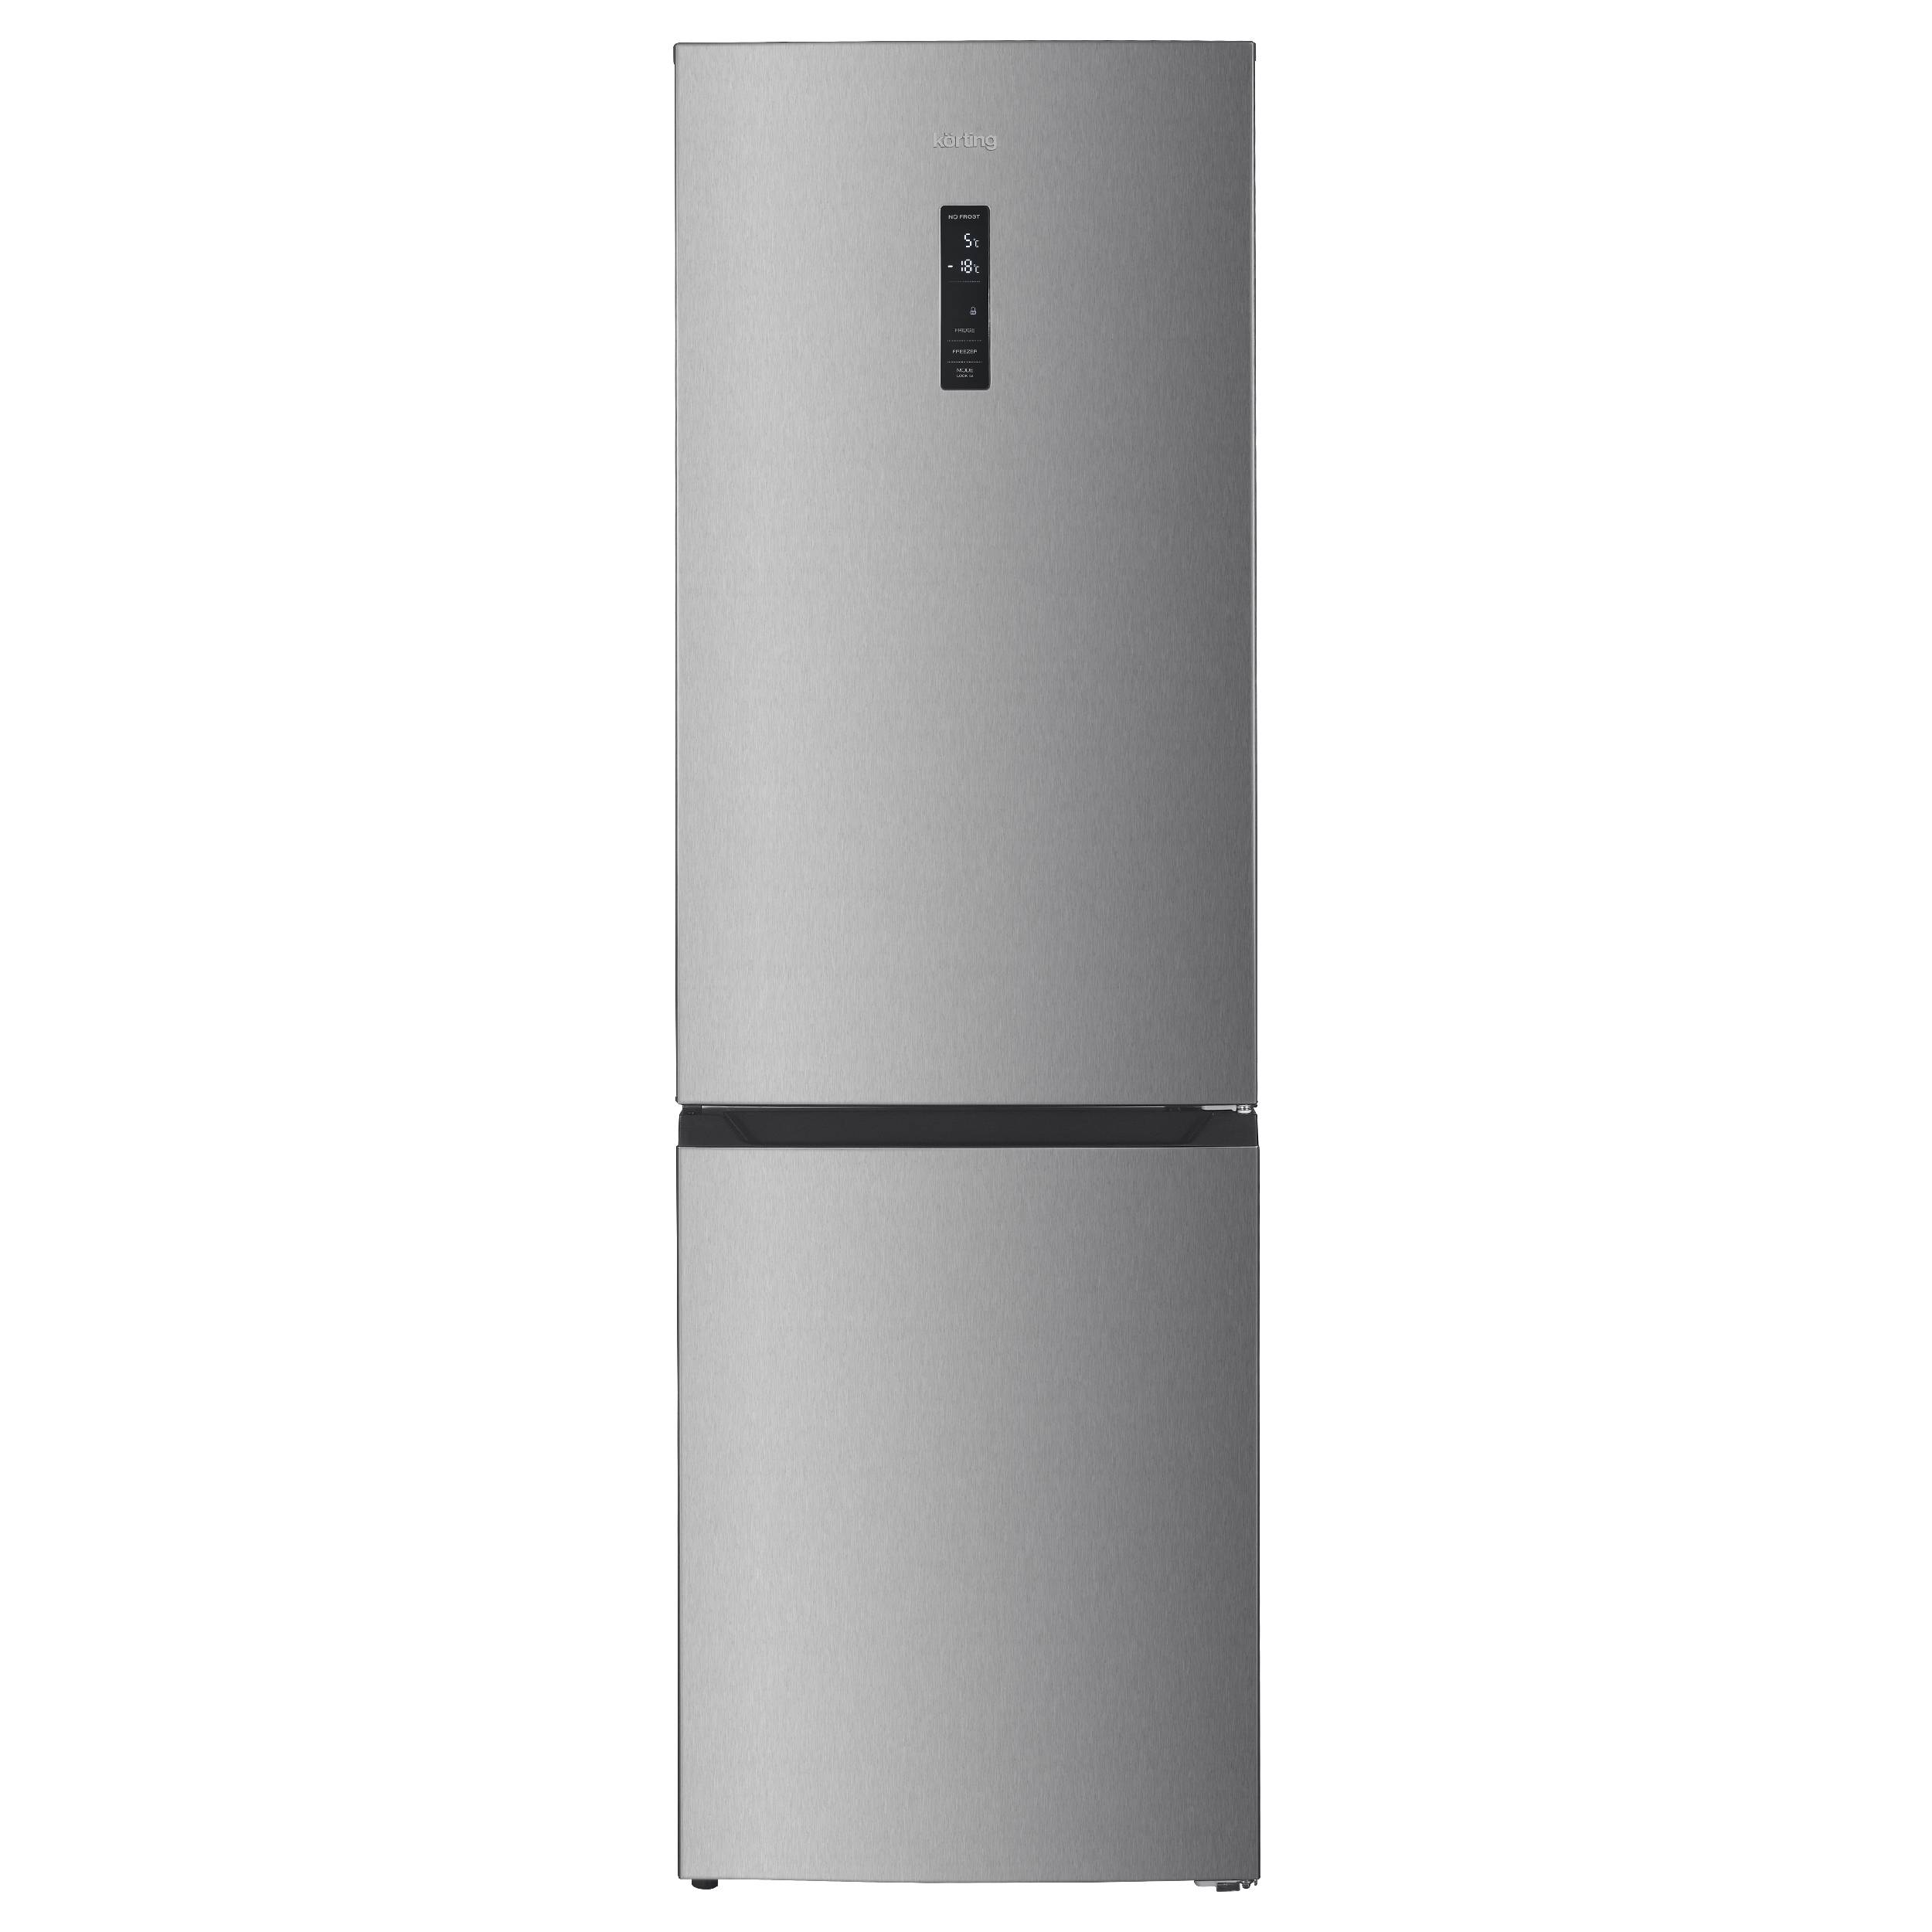 Холодильник Korting KNFC 62980 X серебристый, серый холодильник viomi bcd 502wmlaz03a серый